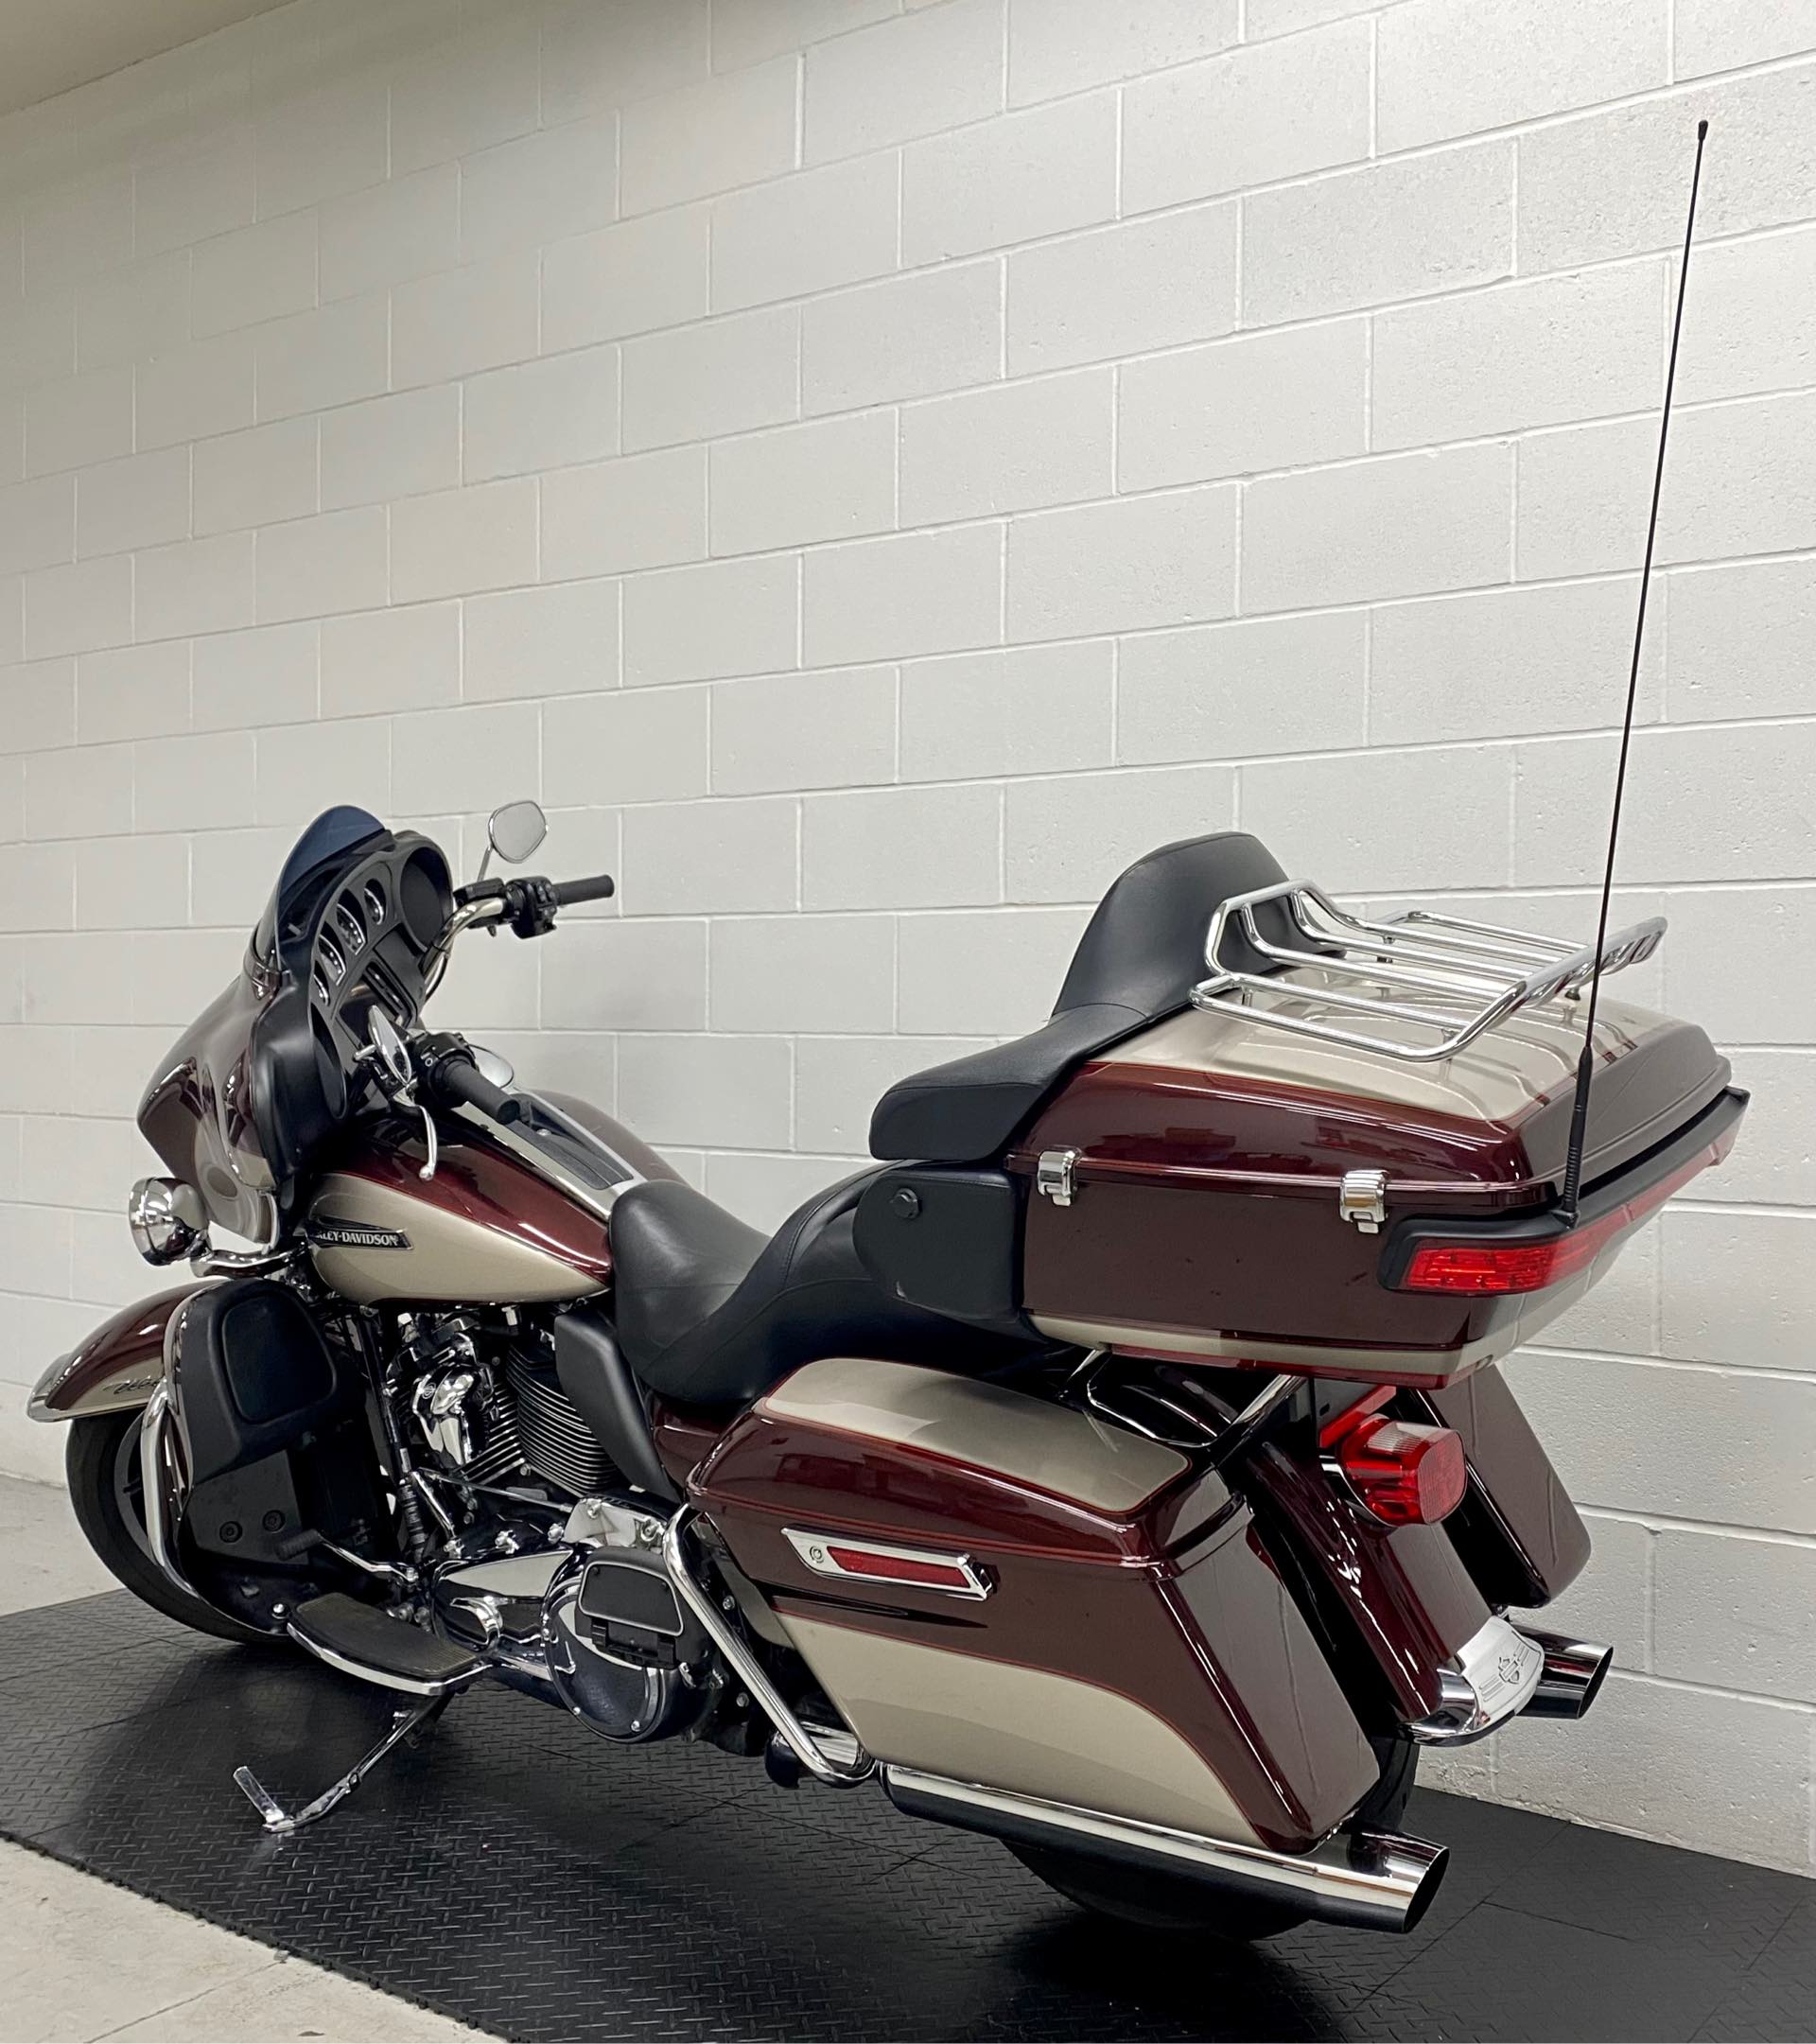 2018 Harley-Davidson Electra Glide Ultra Classic at Destination Harley-Davidson®, Silverdale, WA 98383